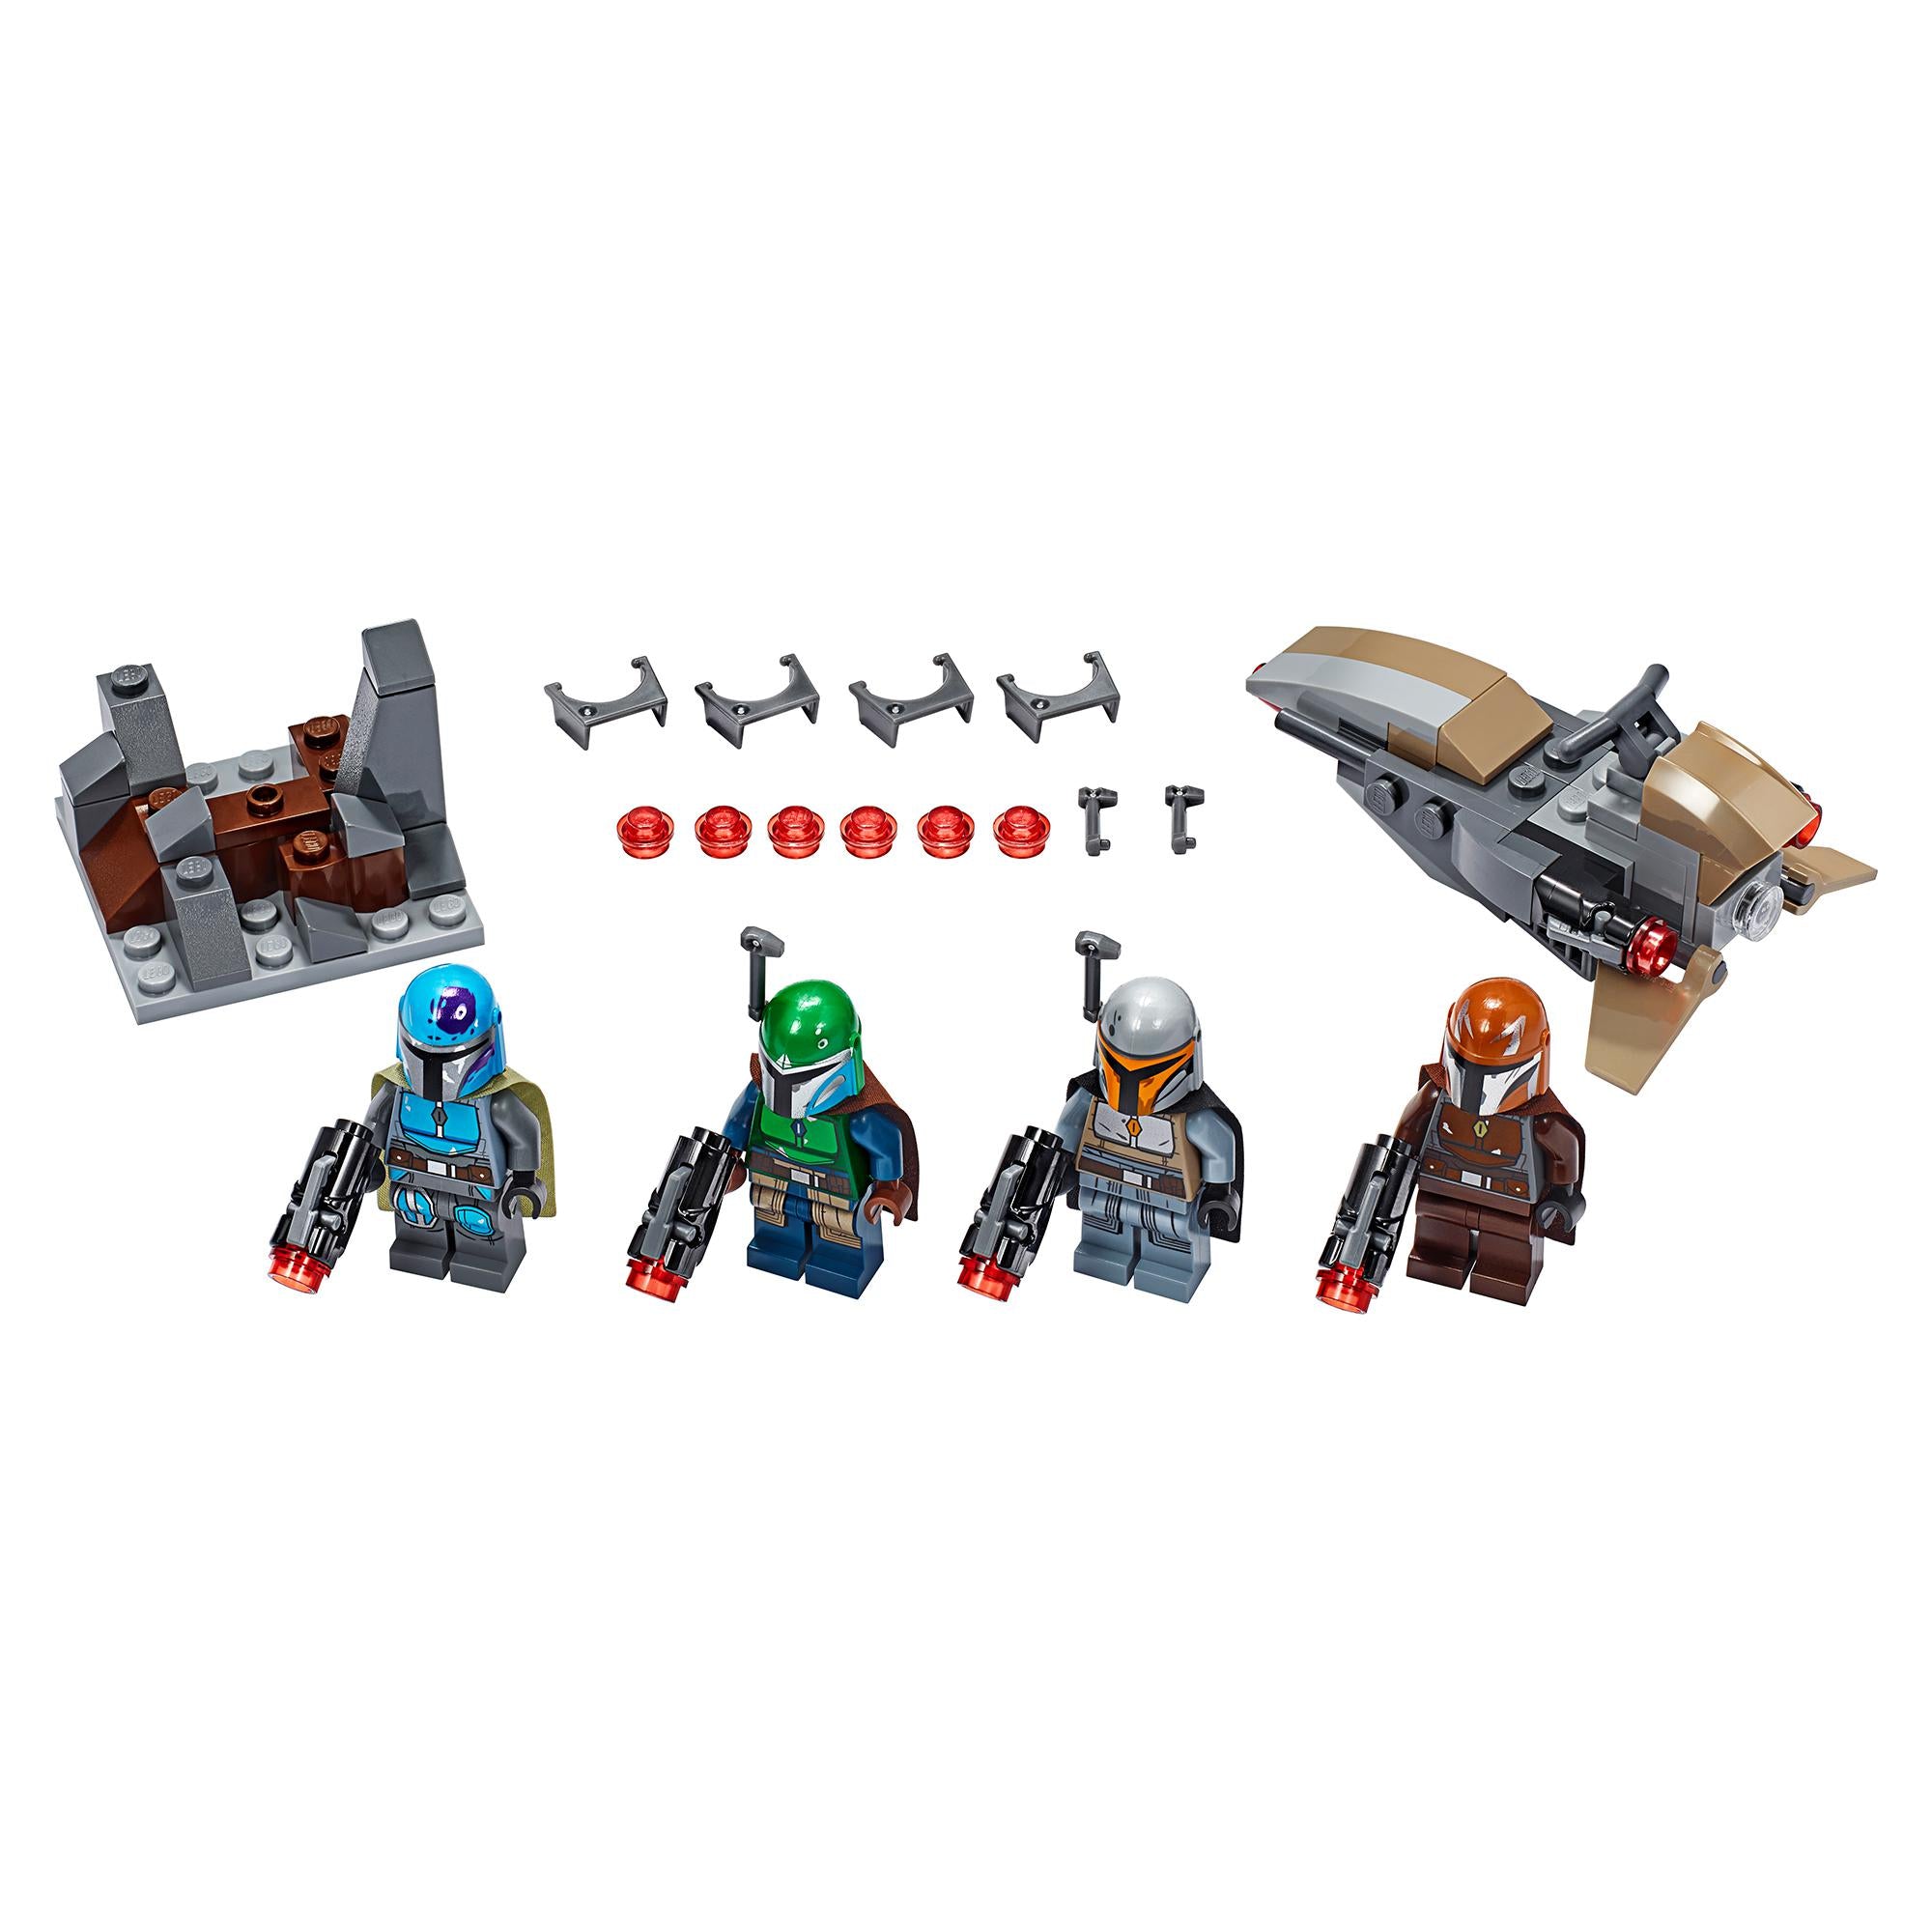 LEGO® Star Wars Mandalorian Battle Pack Set 75267 Default Title